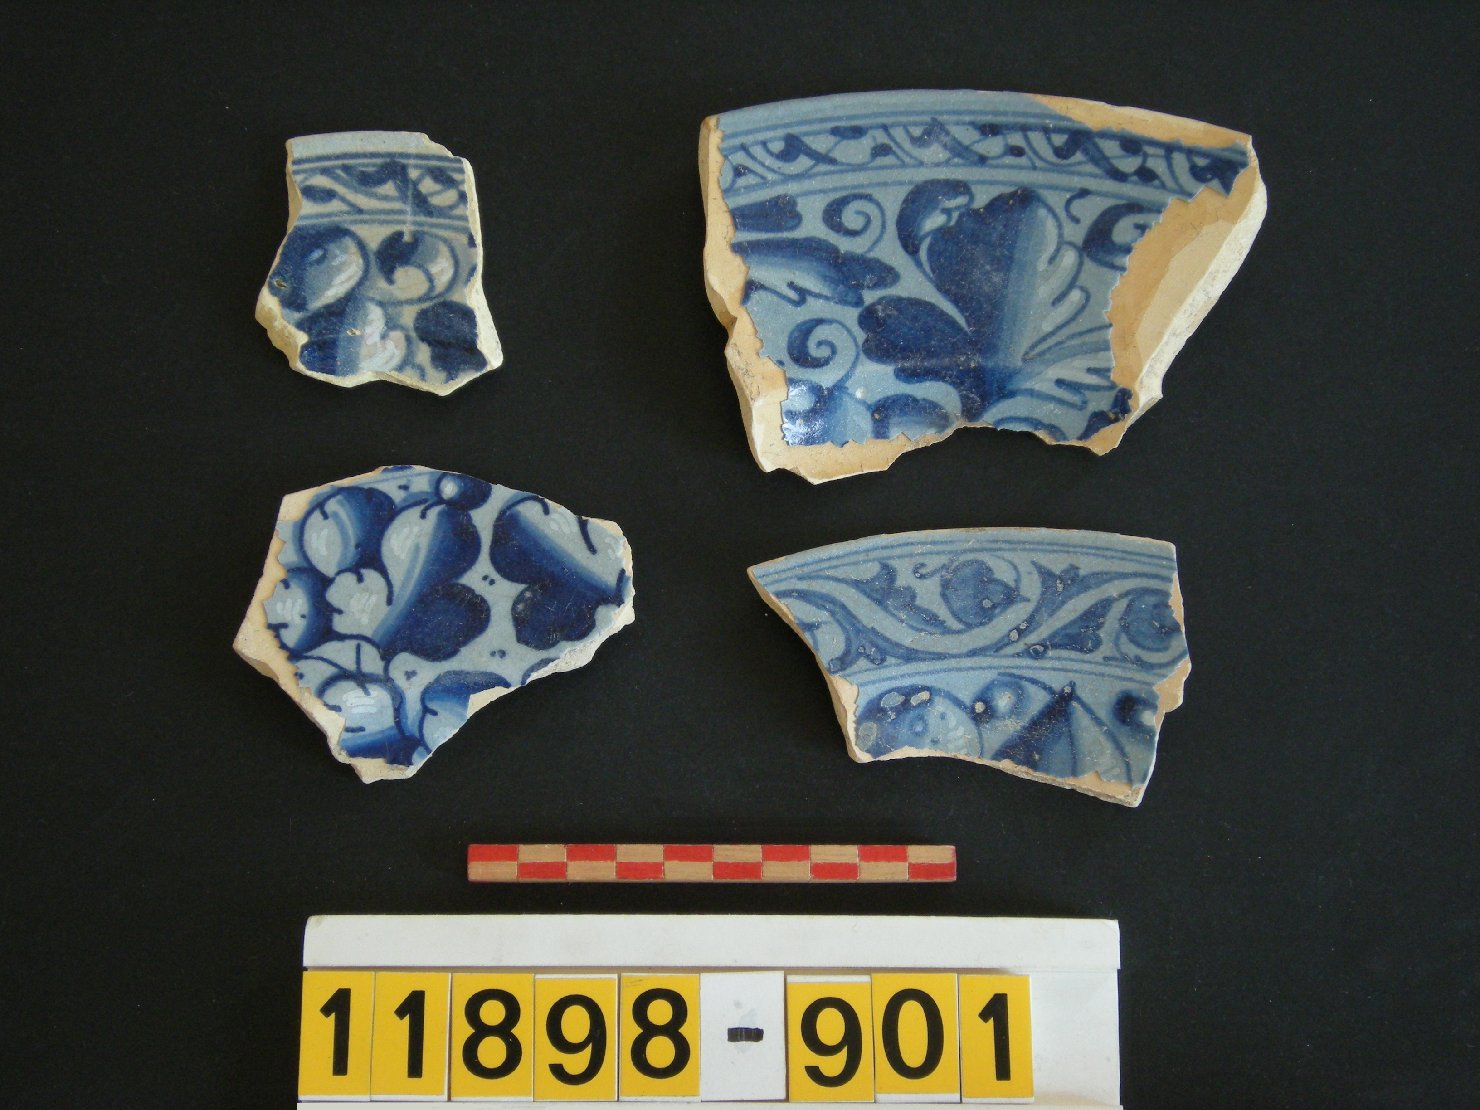 motivi decorativi vegetali (piatto, frammento) - ambito veneziano (seconda metà sec. XVI)